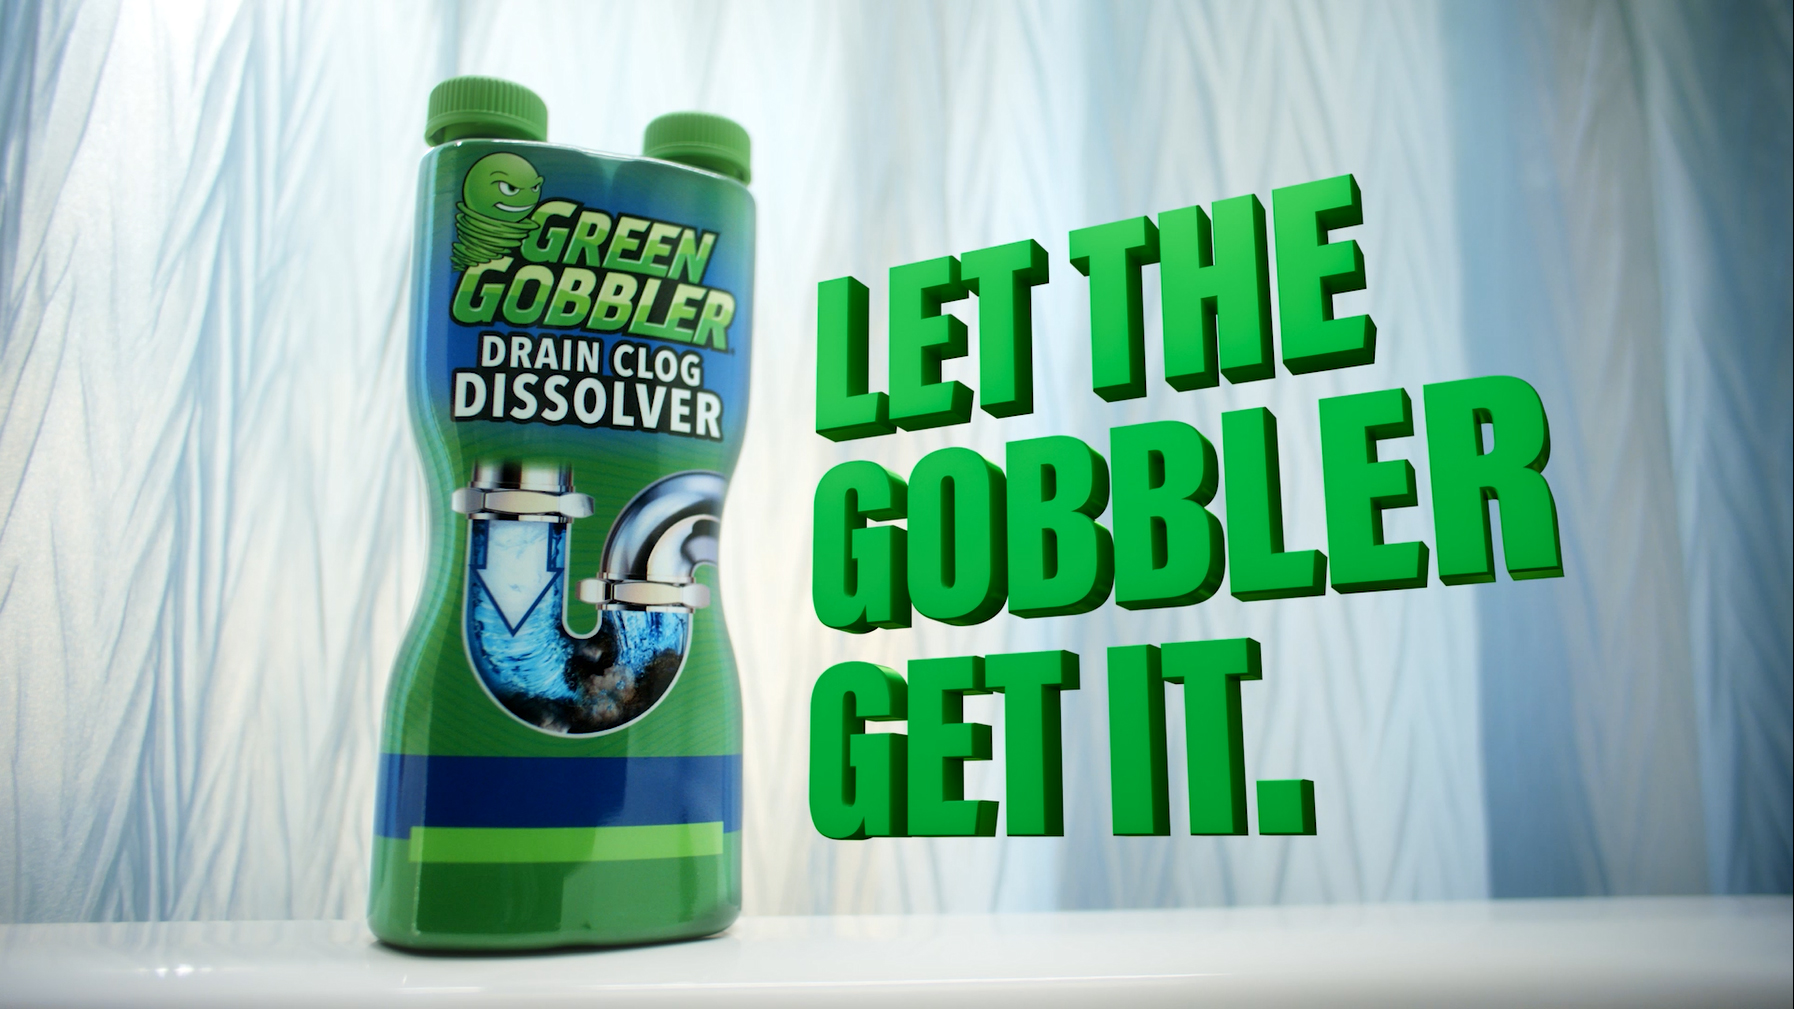  Green Gobbler, Garbage Disposal Drain Cleaner